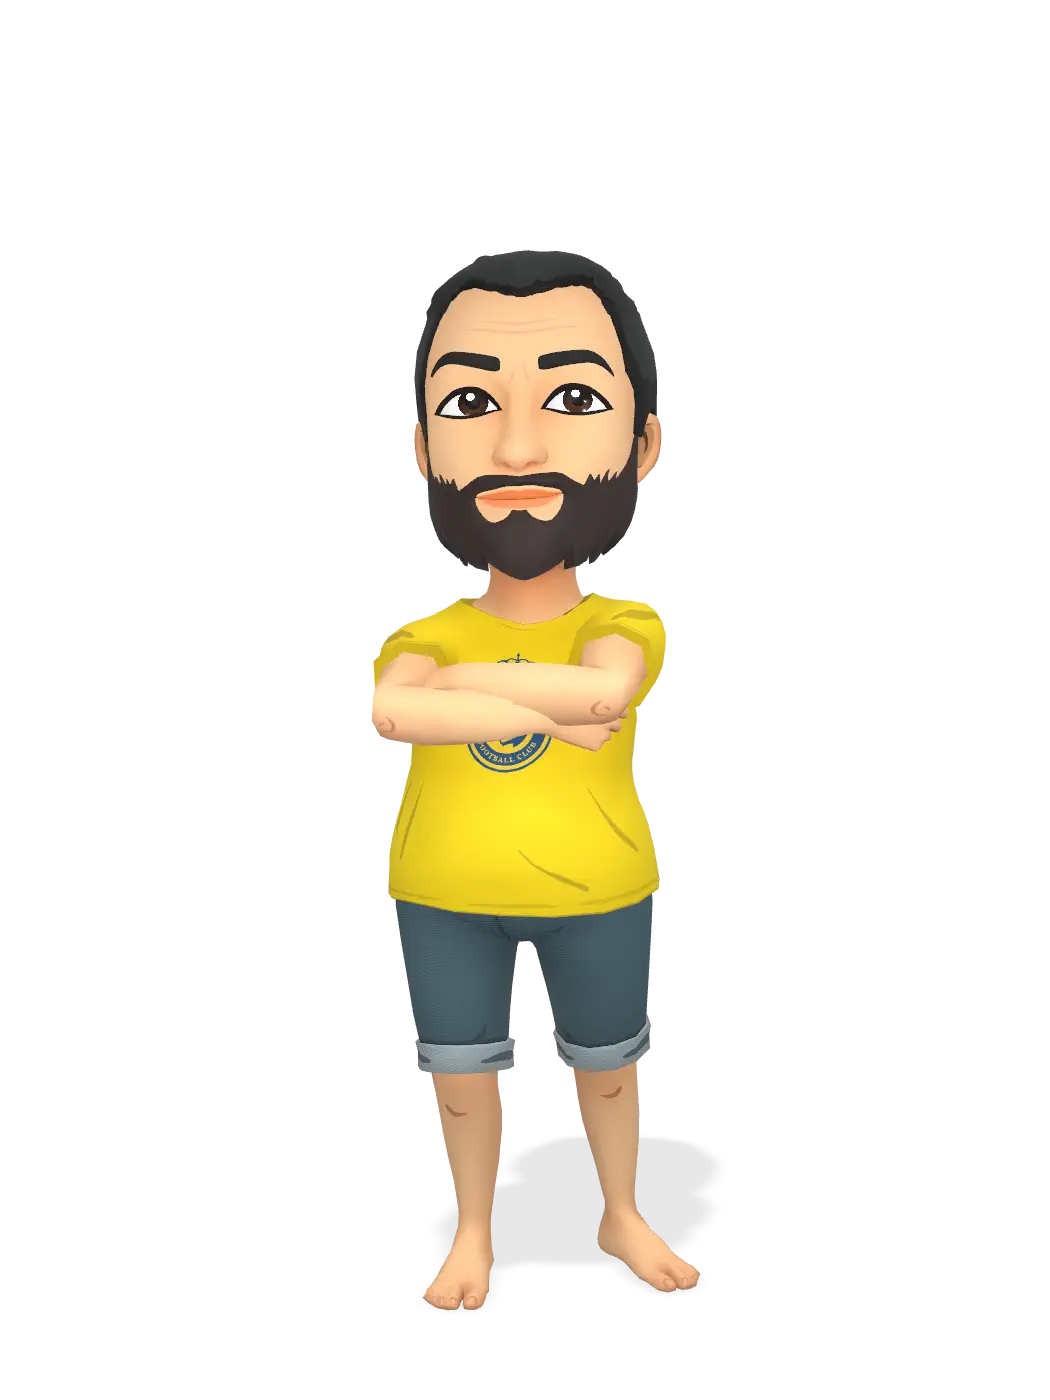 3D Bitmoji for fahadsfh avatar